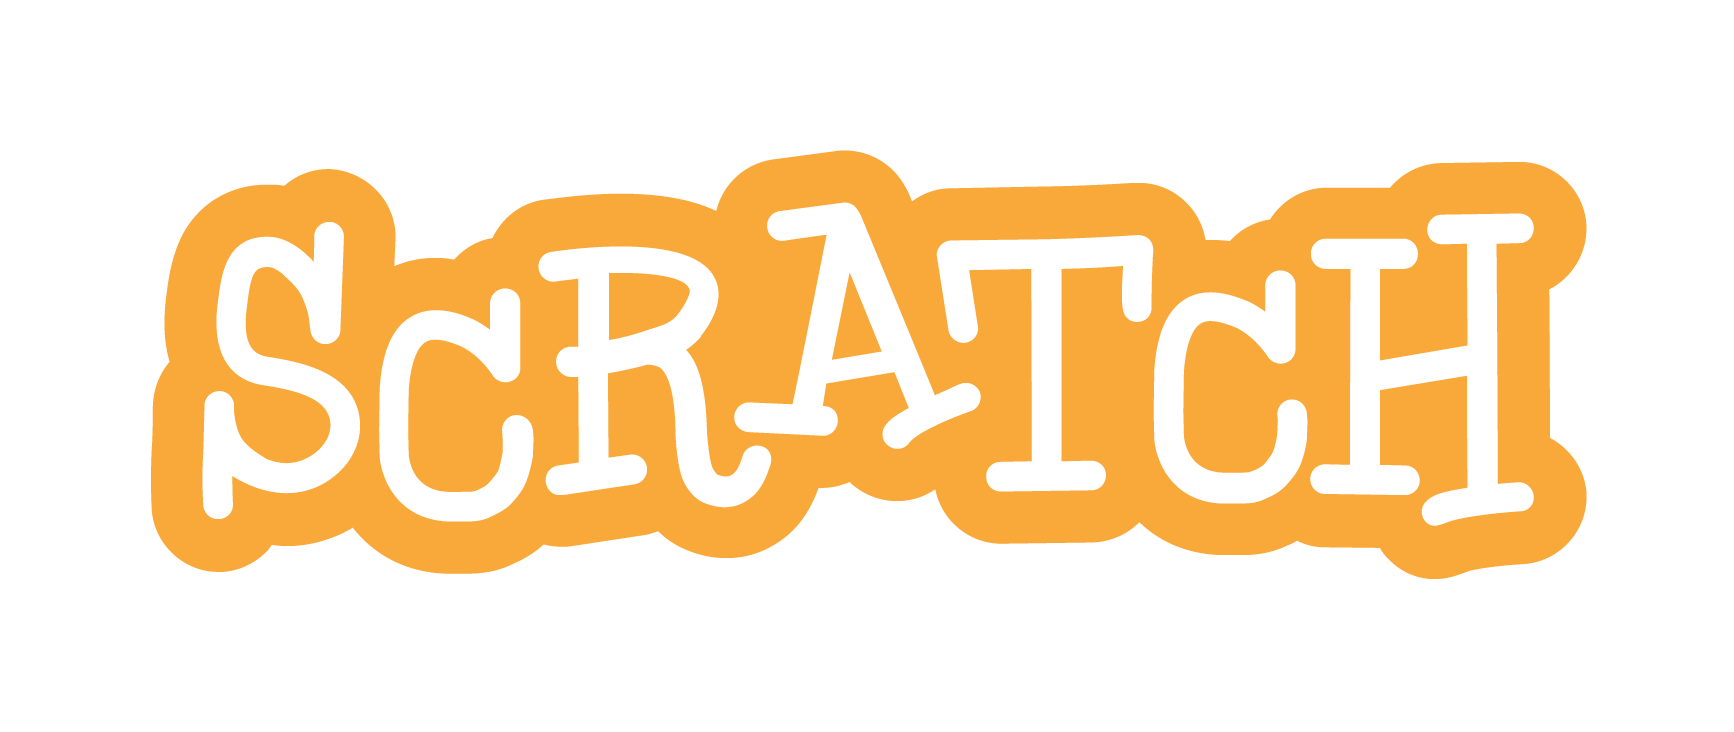 Scratch Logo - Scratch Logo Png (+) - Free Download | fourjay.org